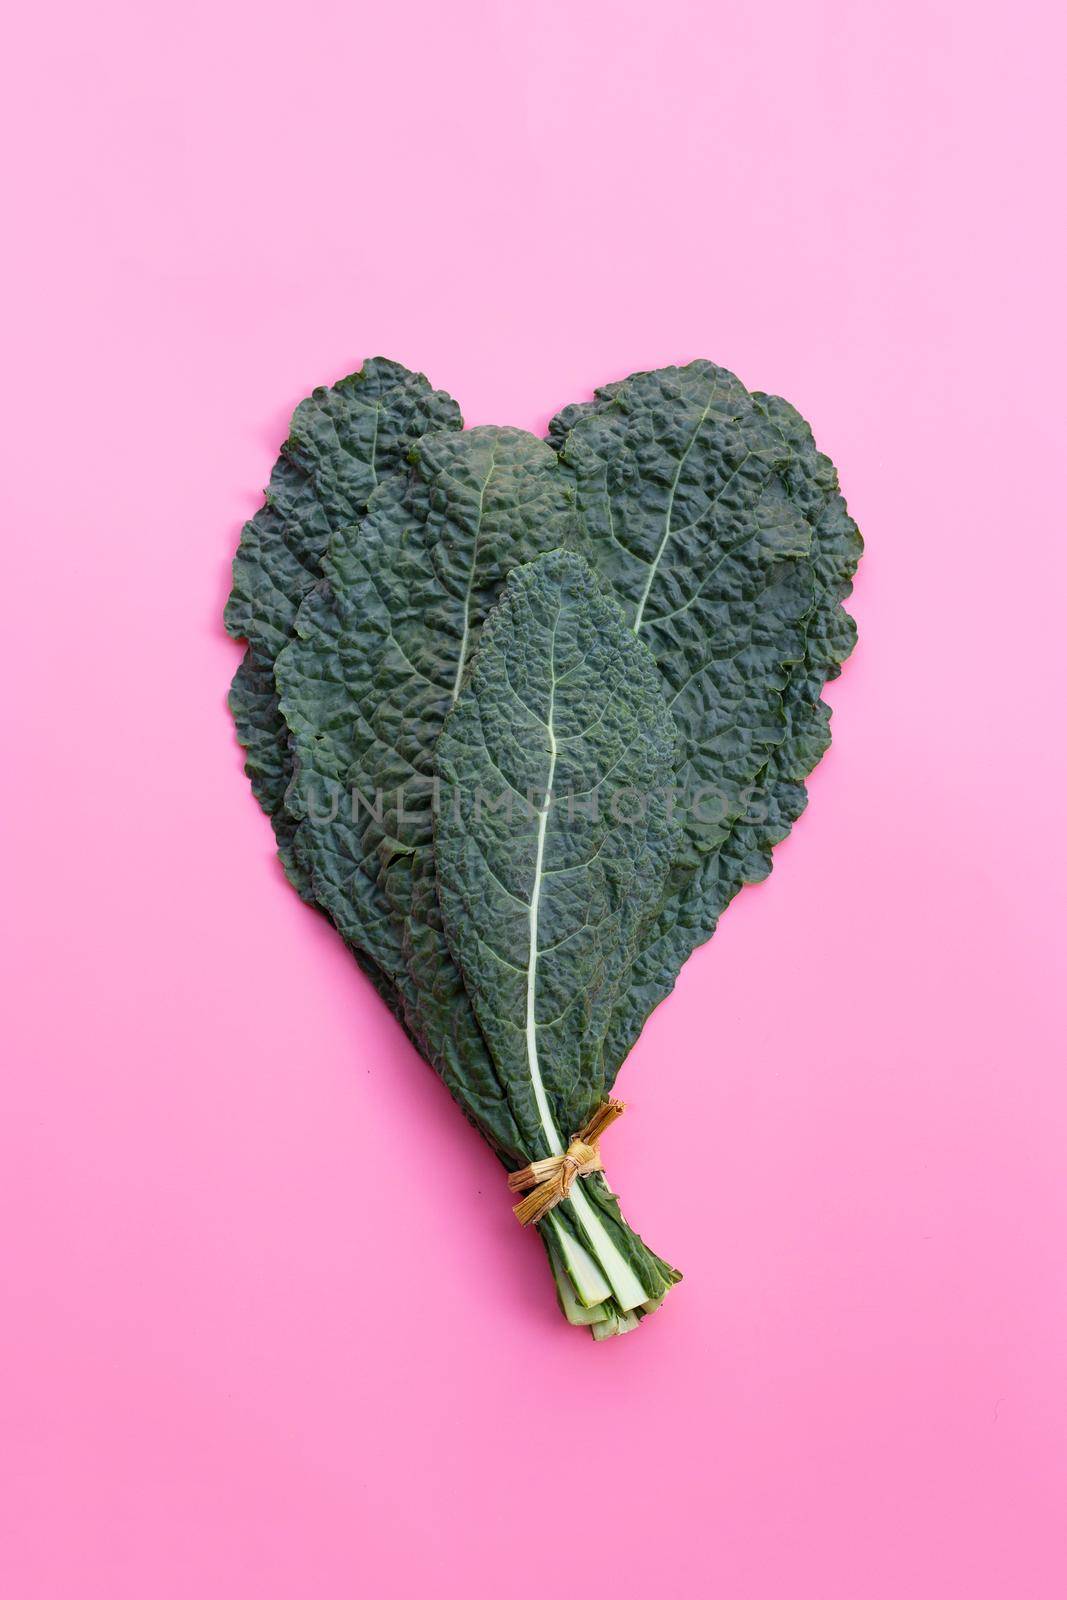 Fresh organic green kale leaves on pink background.